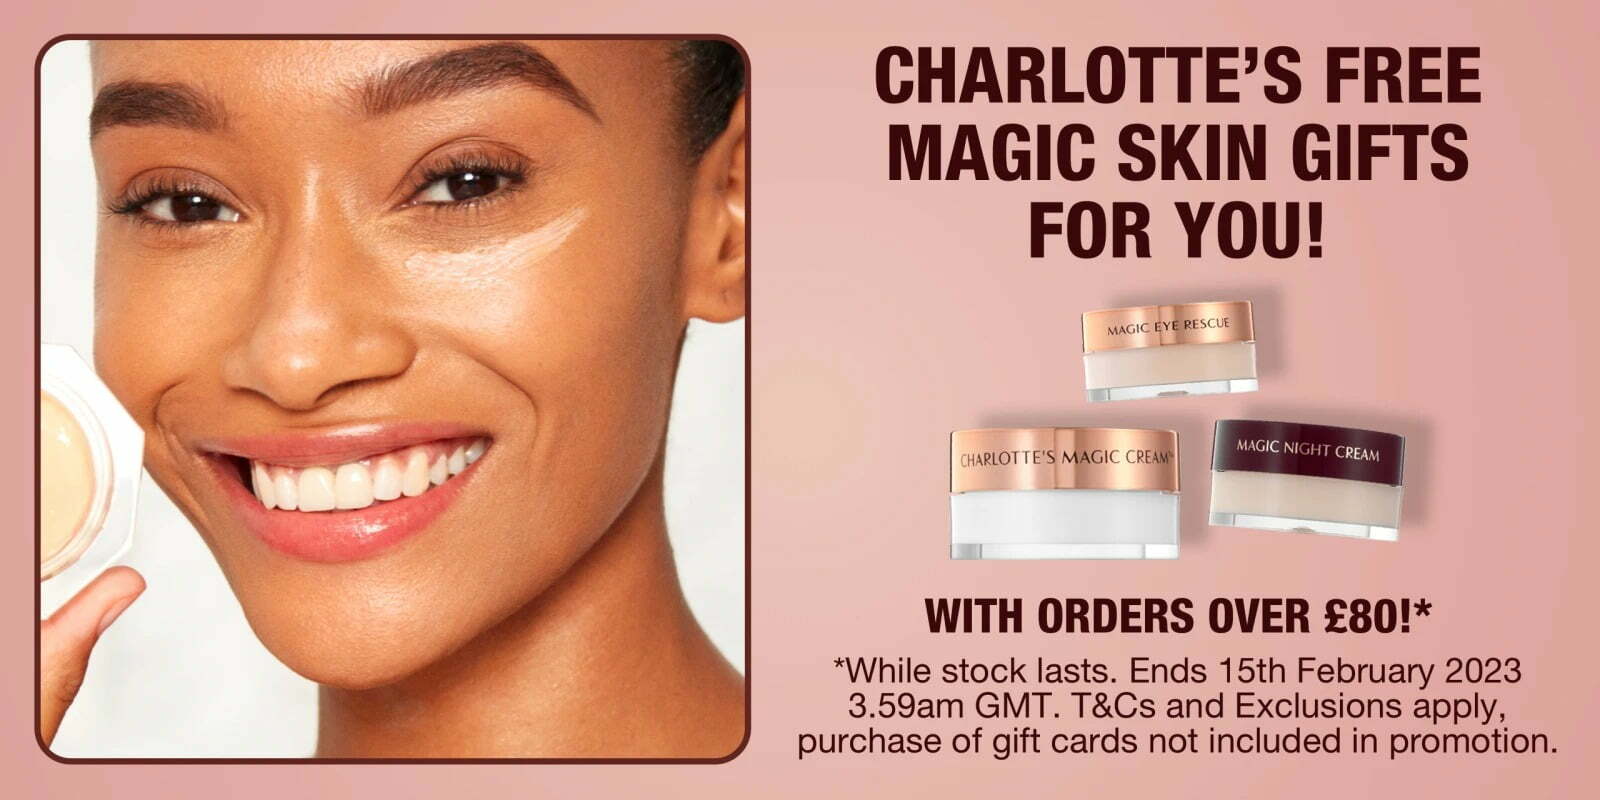 Free mini Magic Eye Rescue, mini Charlotte’s Magic Cream and mini Magic Night Cream with orders over £80 at Charlotte Tilbury